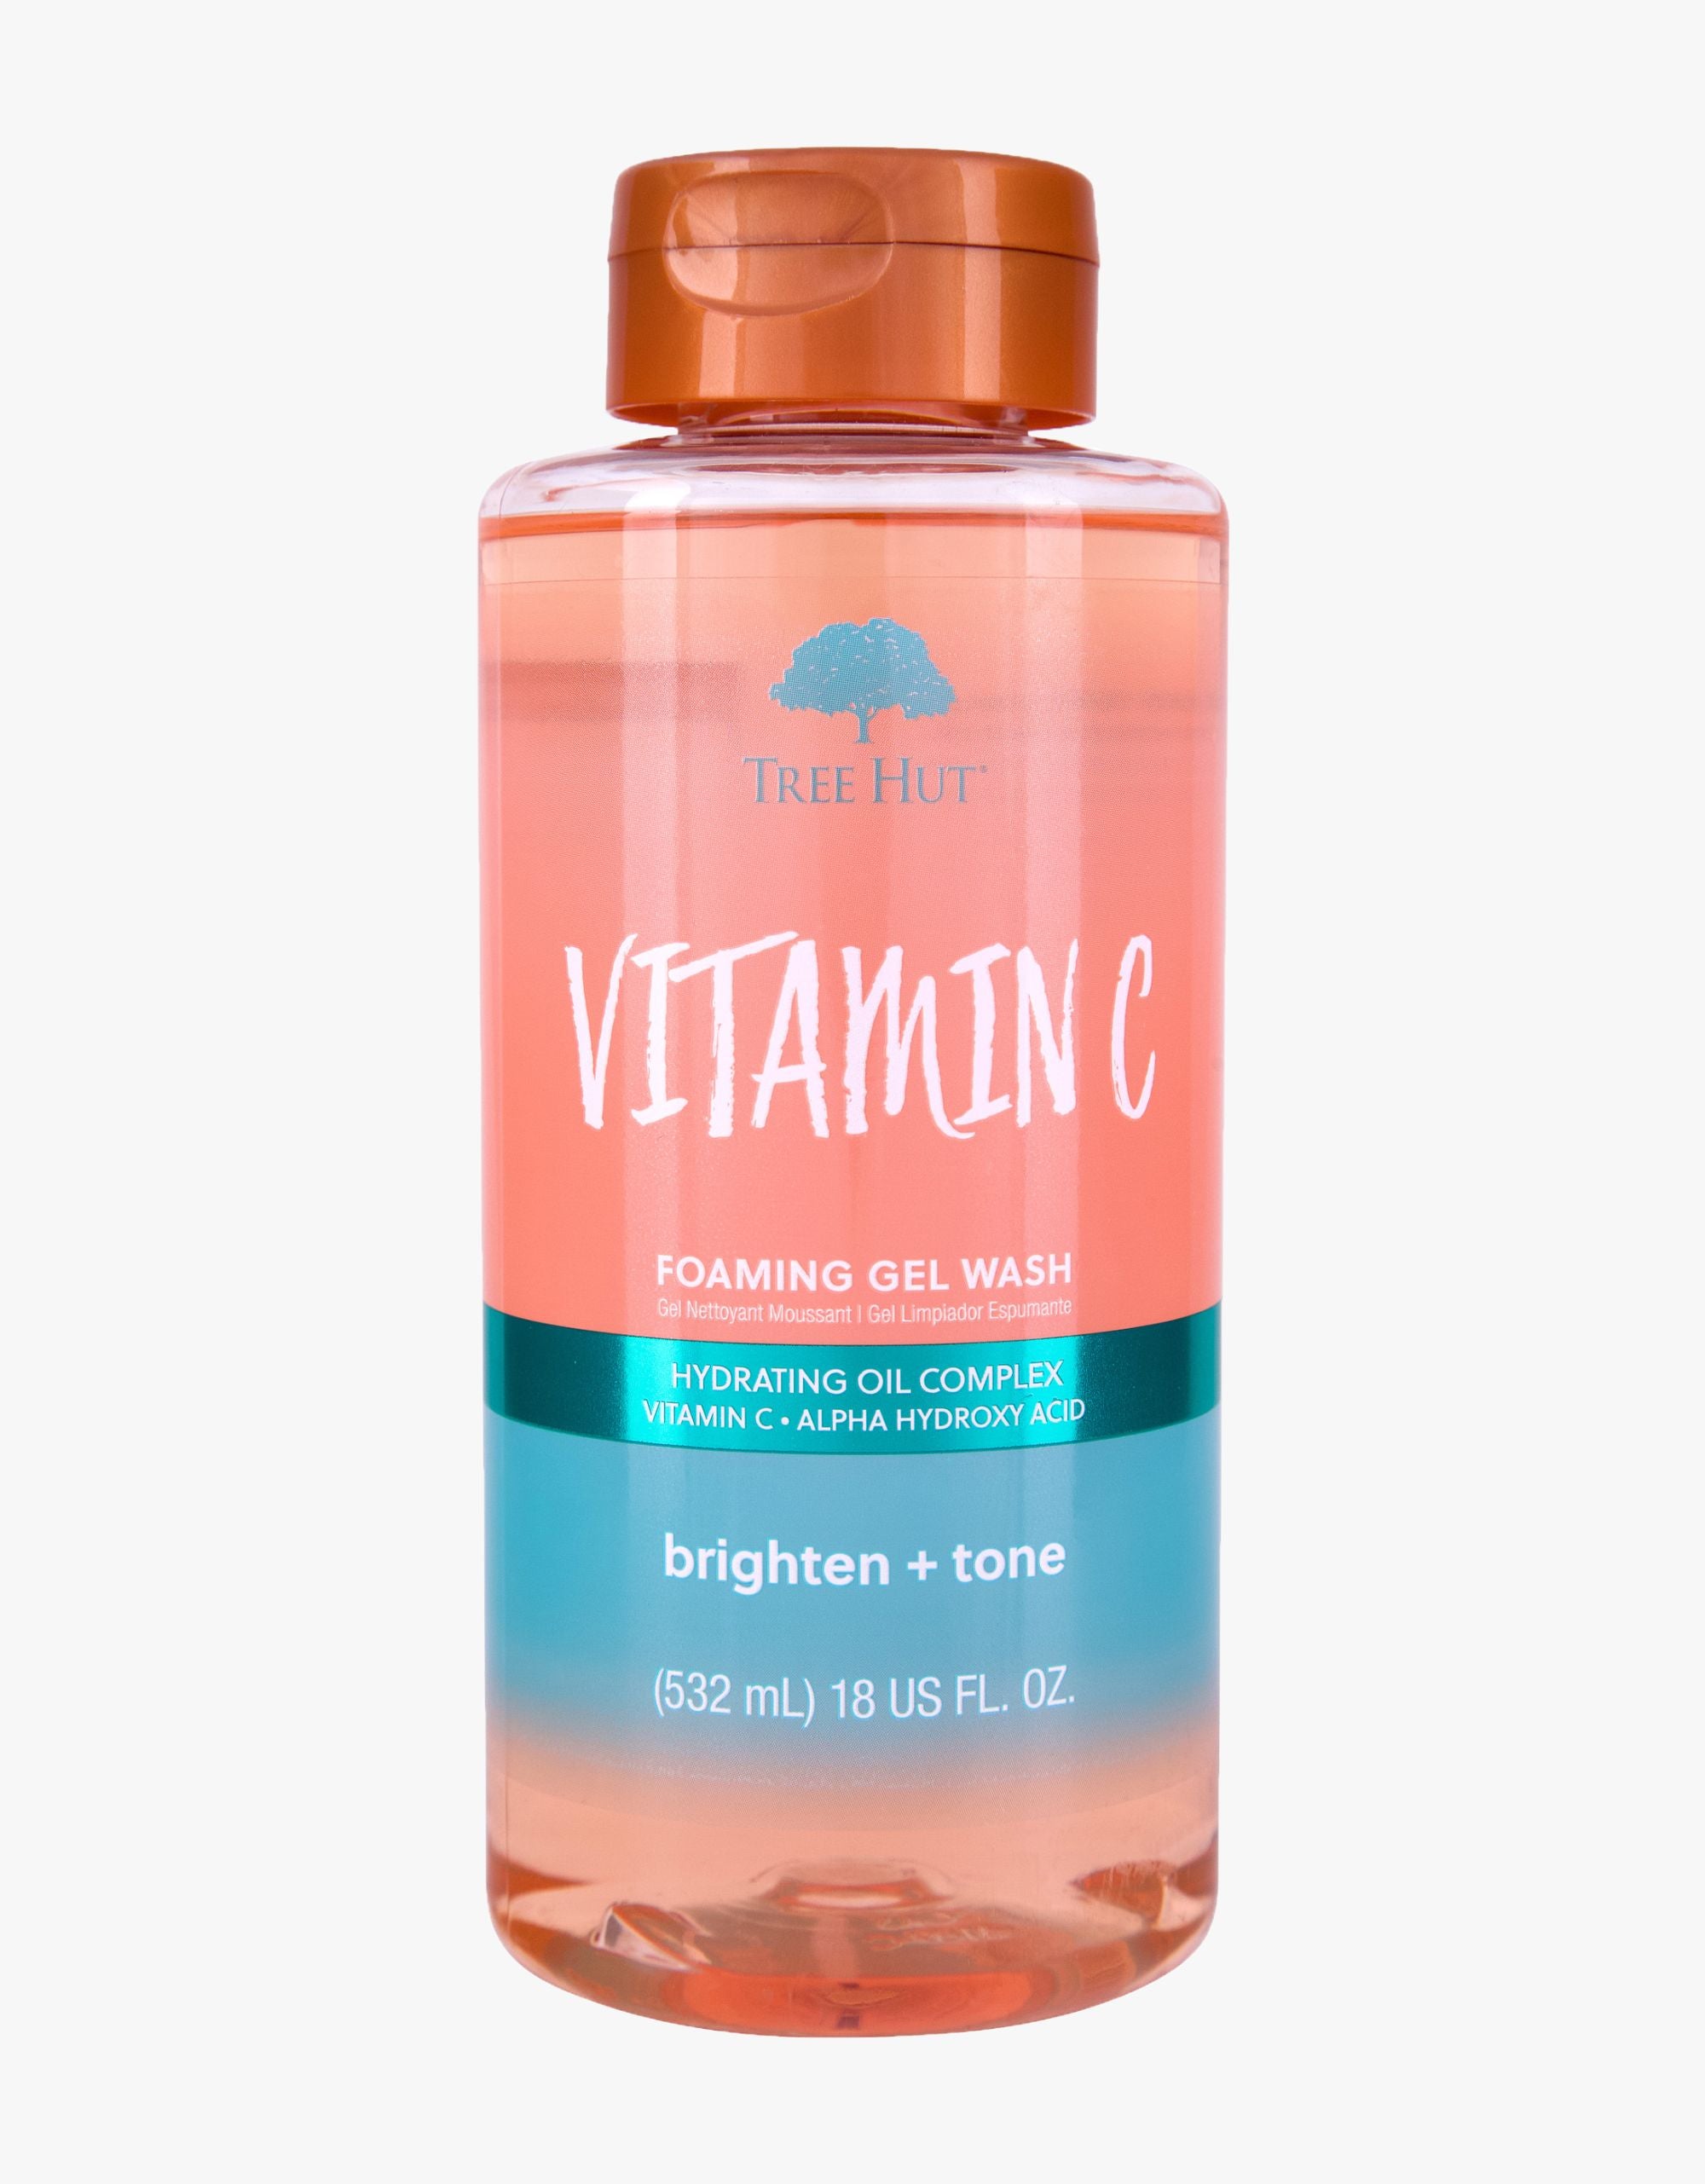 Soap | Vitamin C